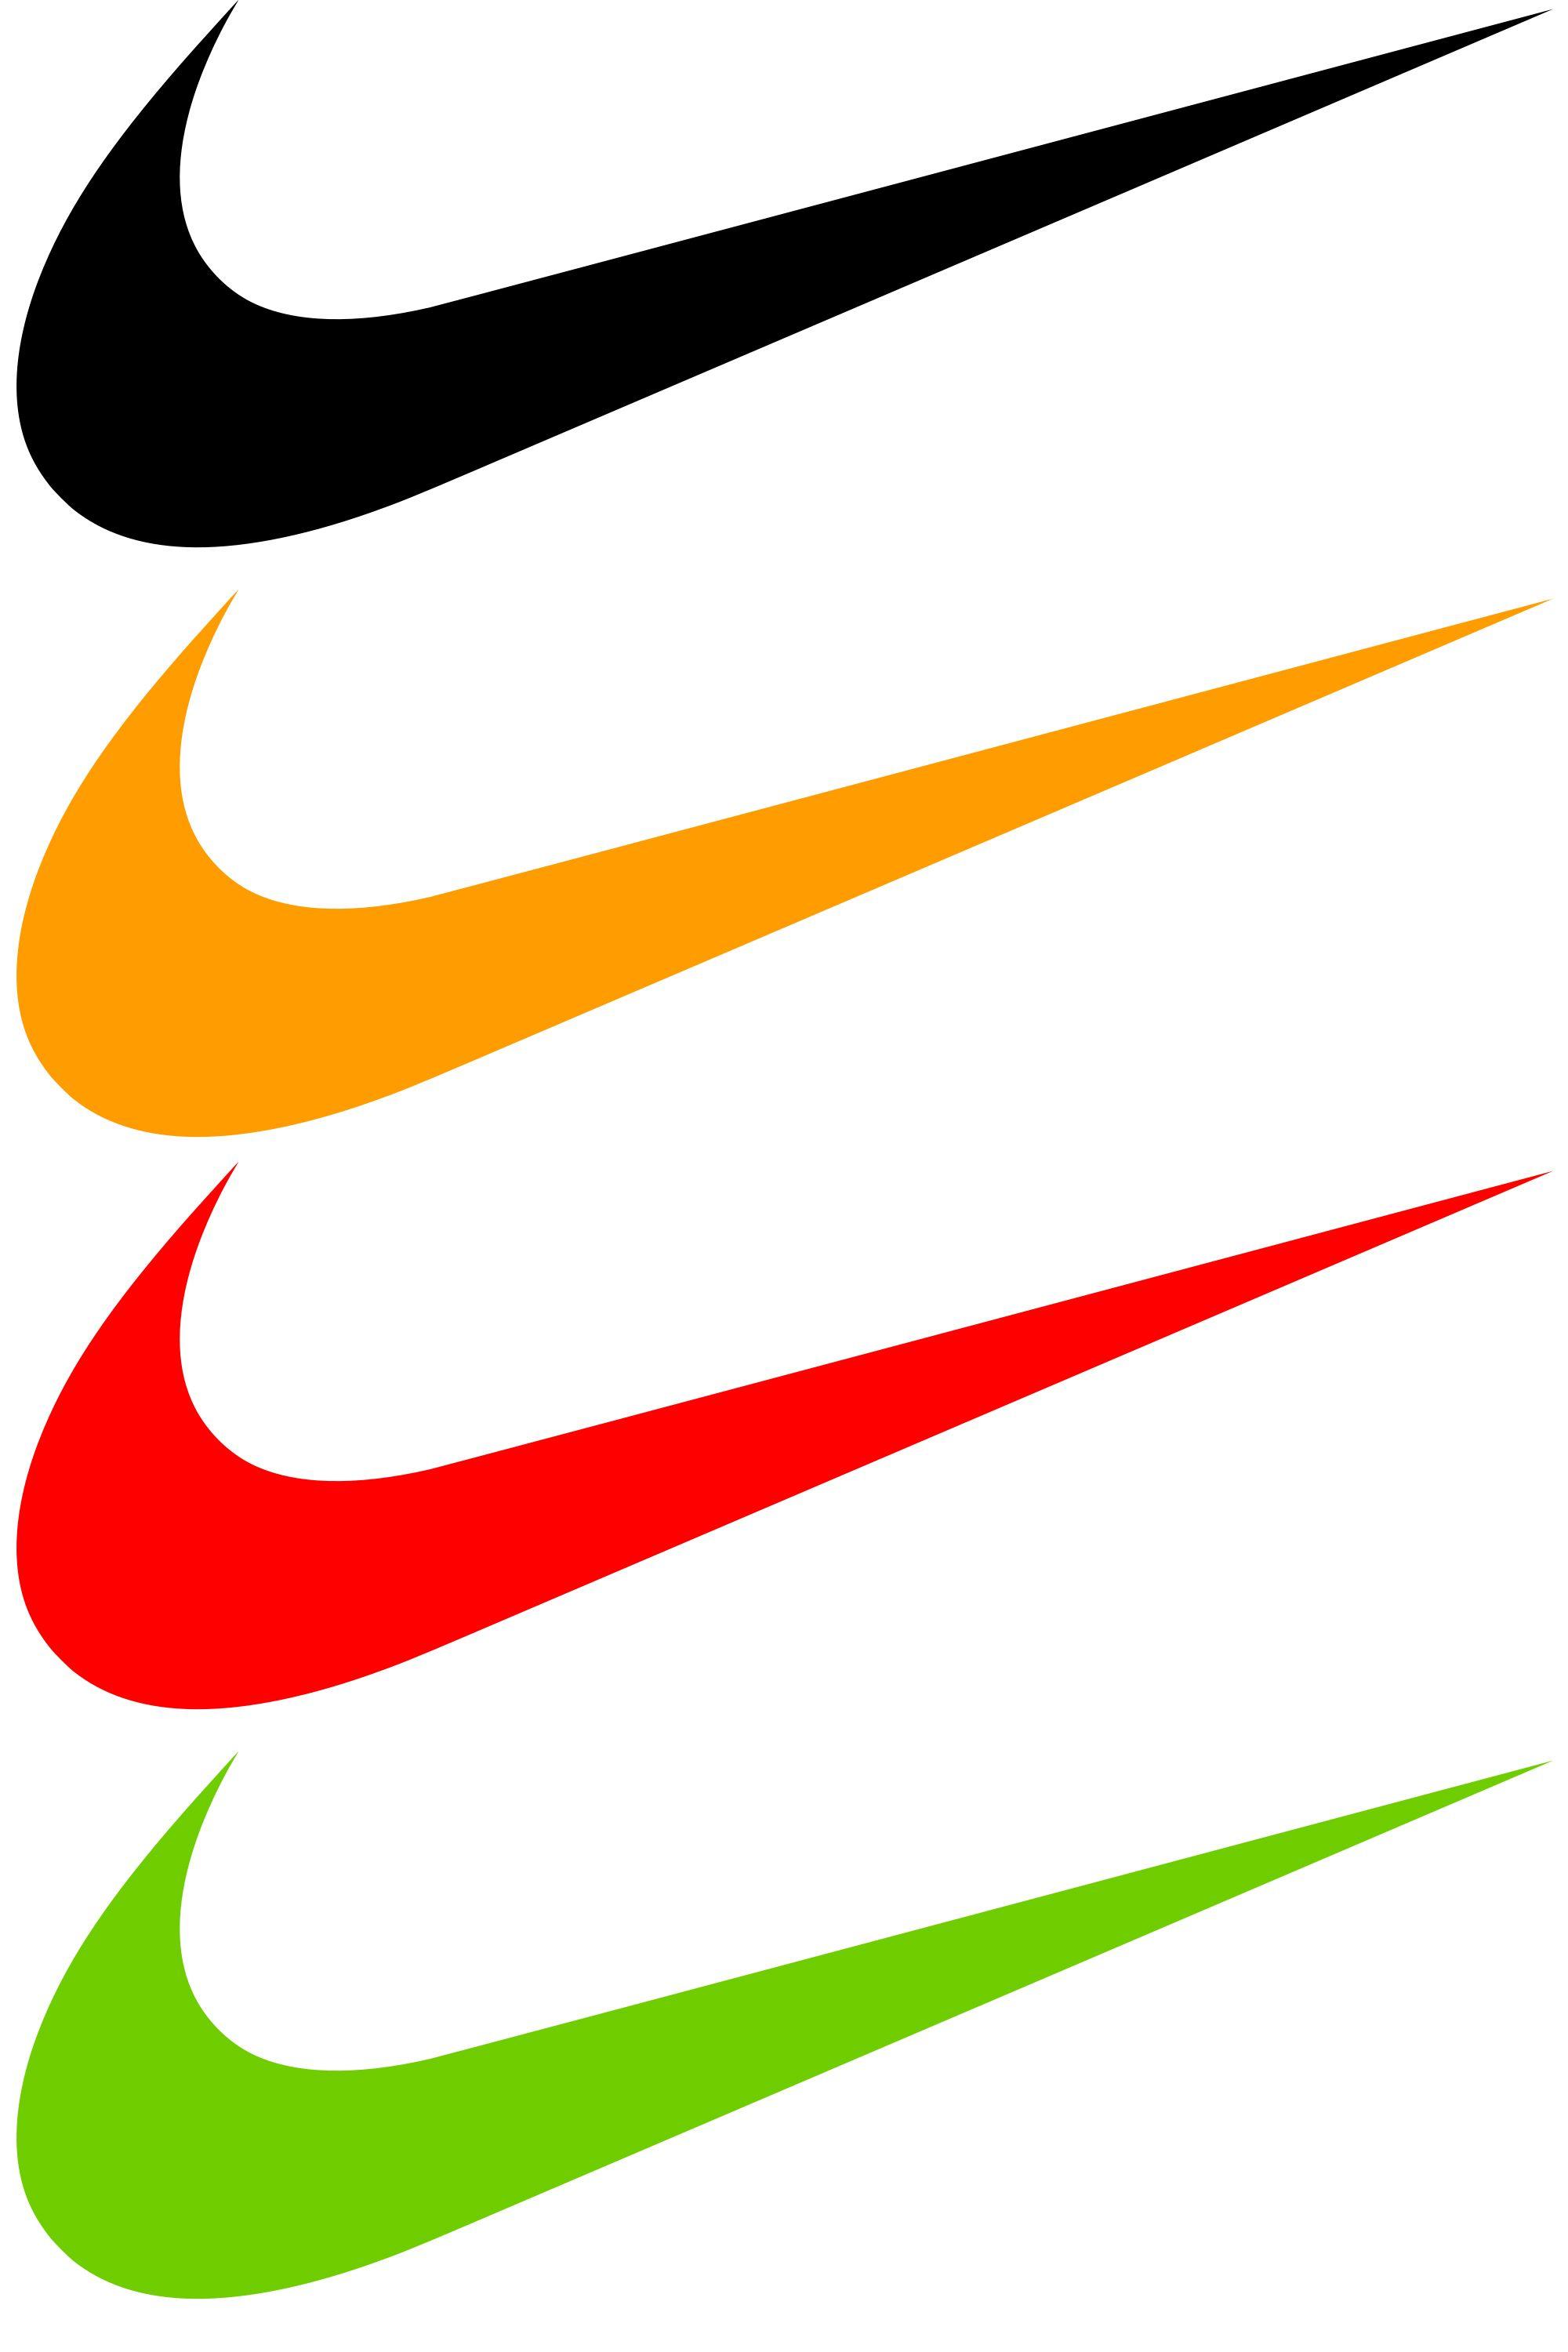 Colorful Nike Swoosh Logo - Nike Logo, Nike Symbol Meaning, History and Evolution